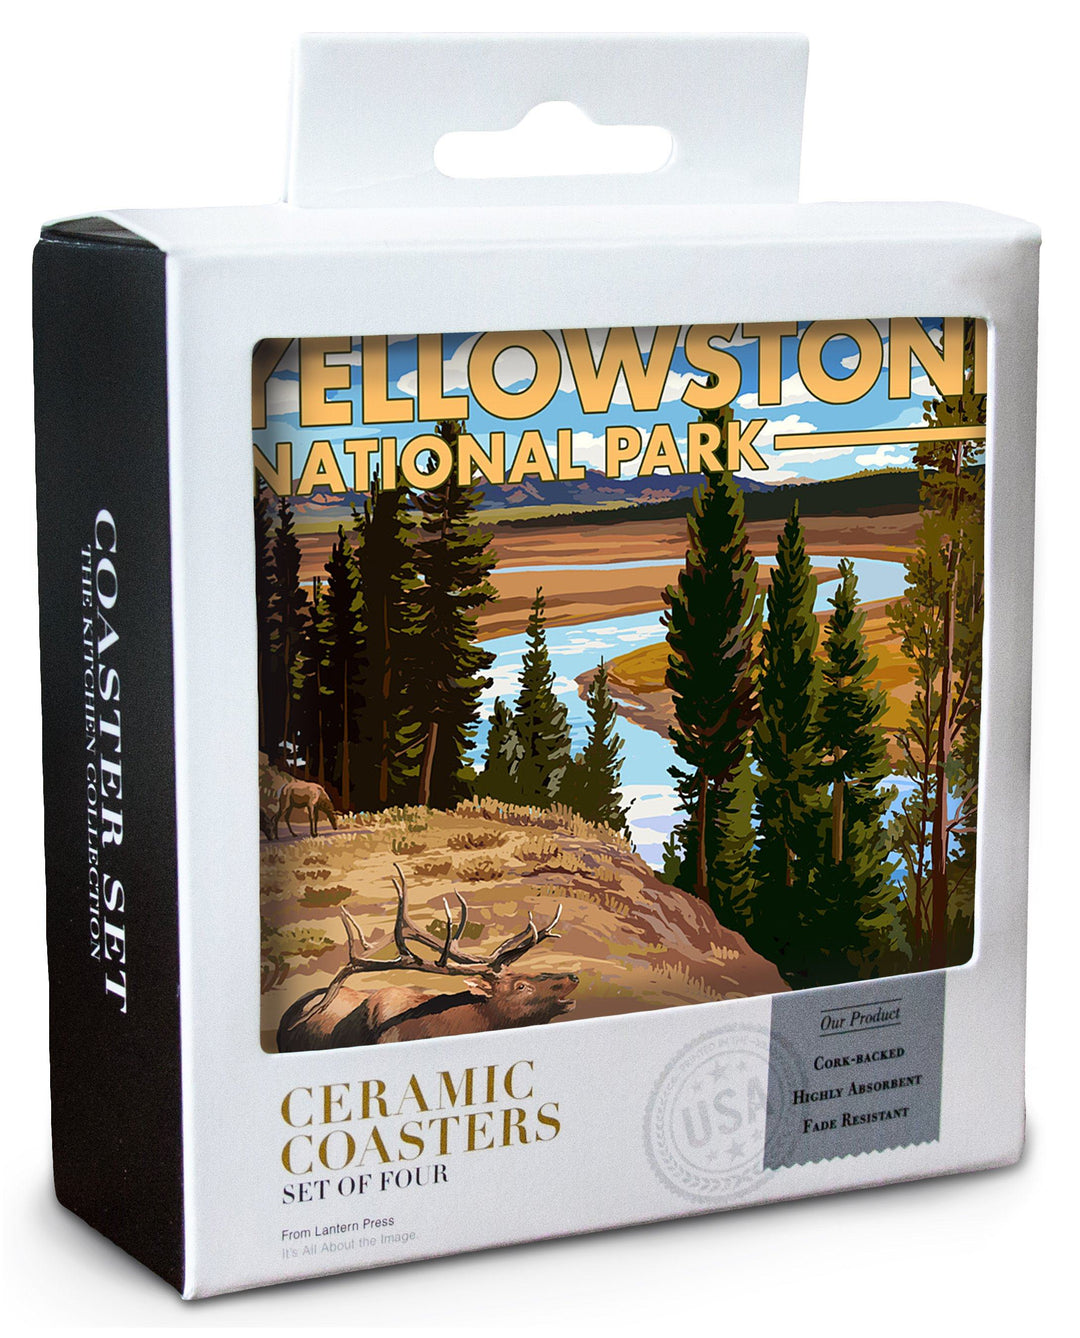 Yellowstone National Park, Wyoming, Yellowstone River & Elk, Lantern Press Artwork, Coaster Set Coasters Nightingale Boutique 